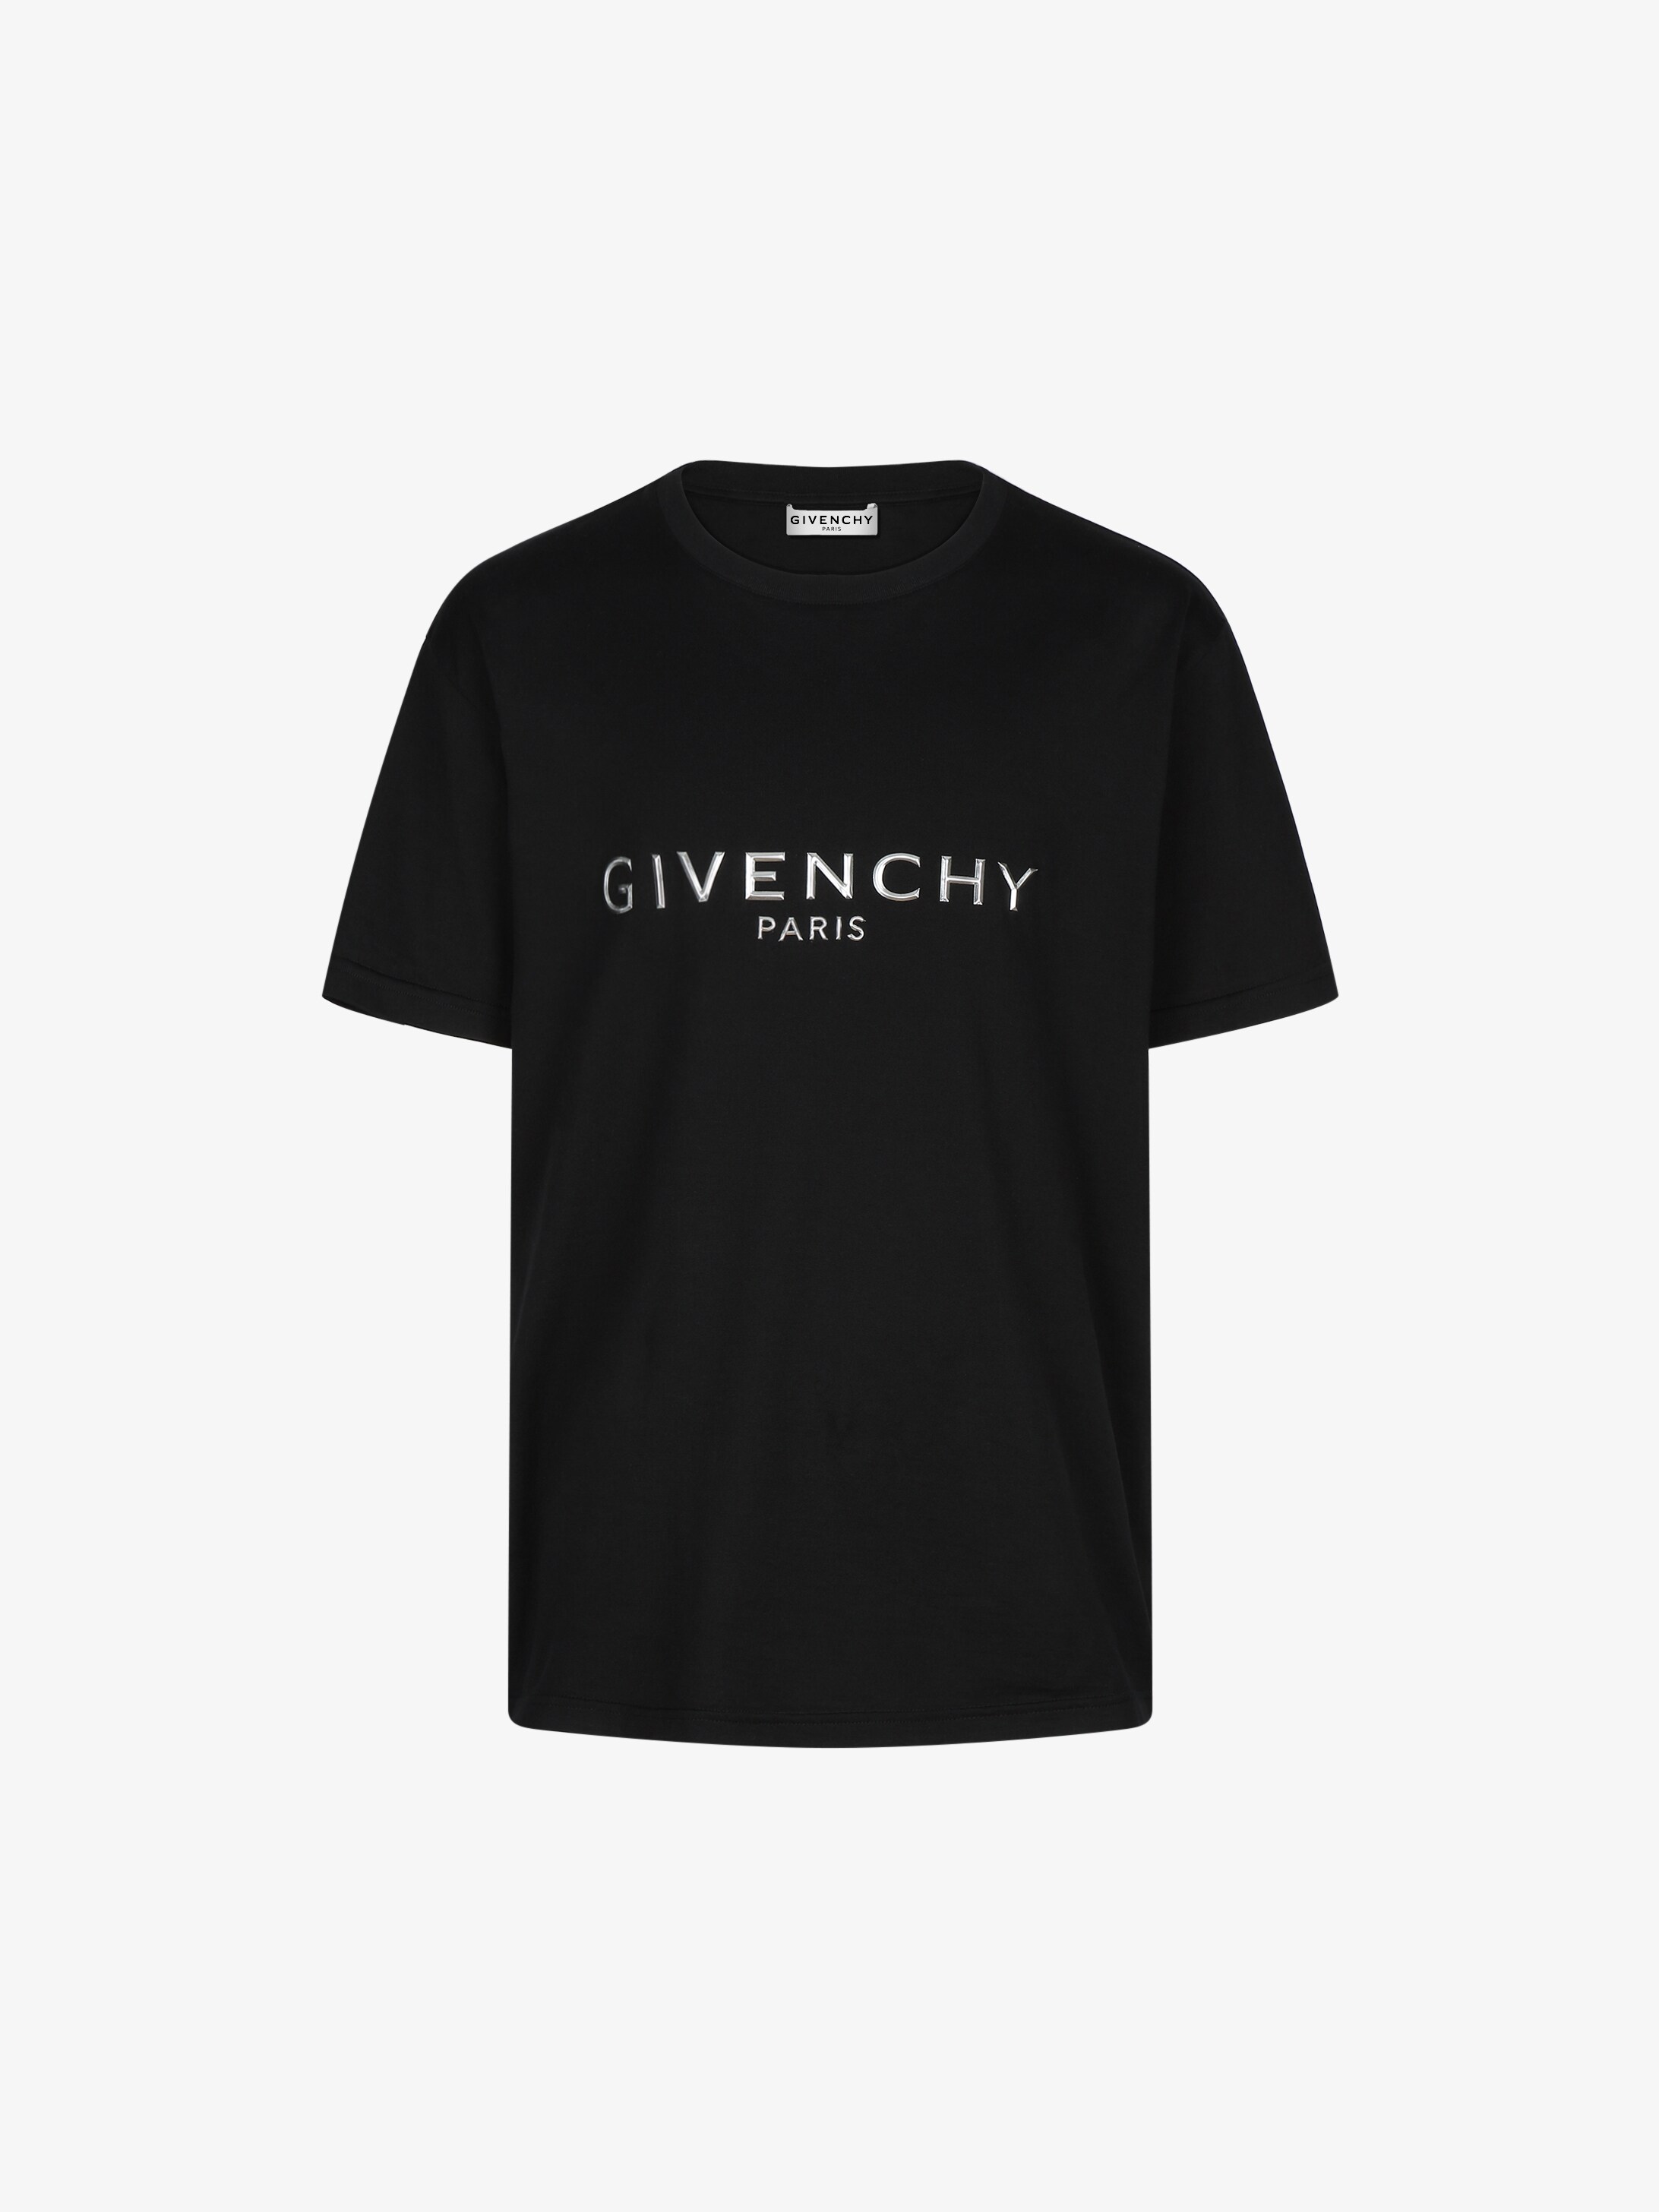 givenchy paris shirt black